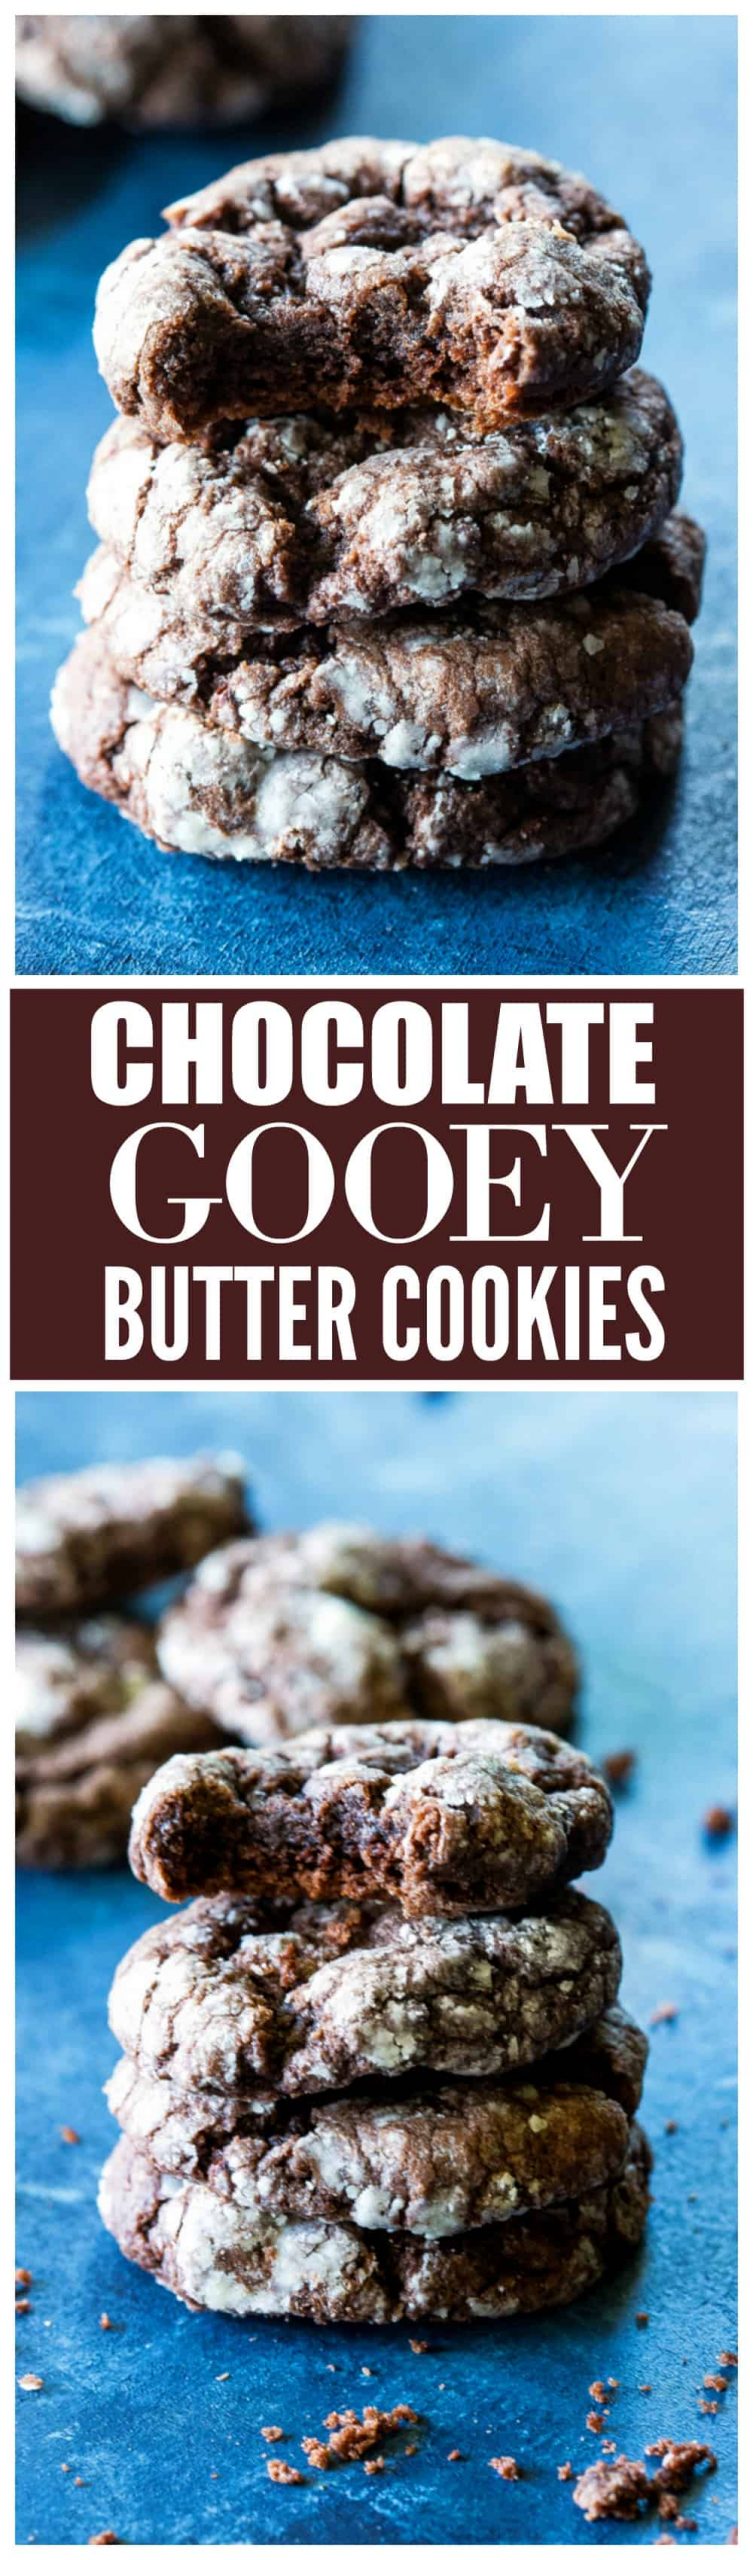 Chocolate Ooey Gooey Butter Cookies - so easy and so good. #chocolate #ooey #gooey #butter #cookies